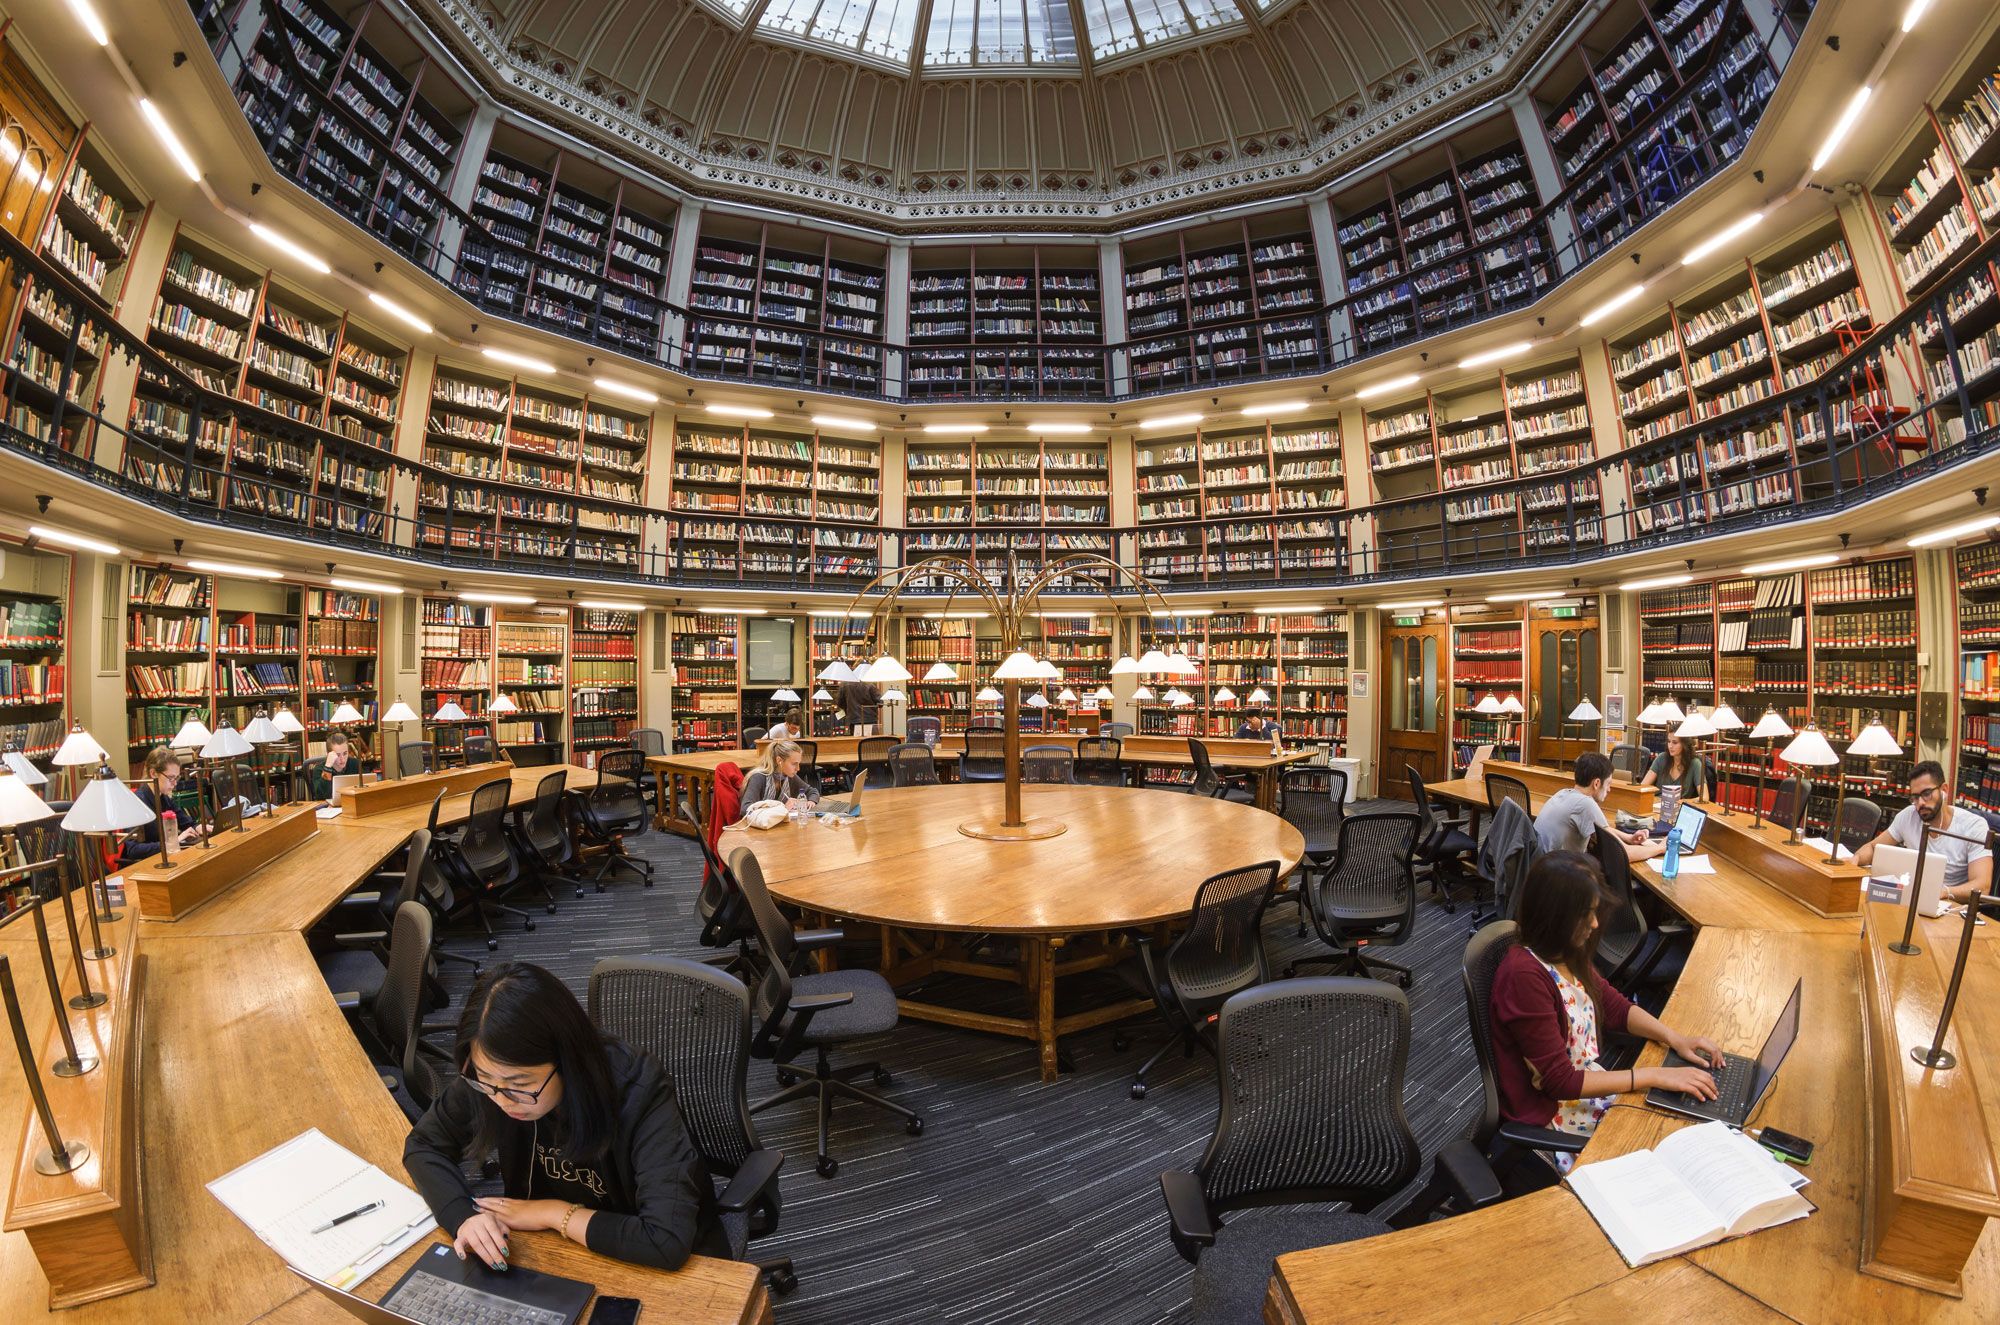 London’s British Library